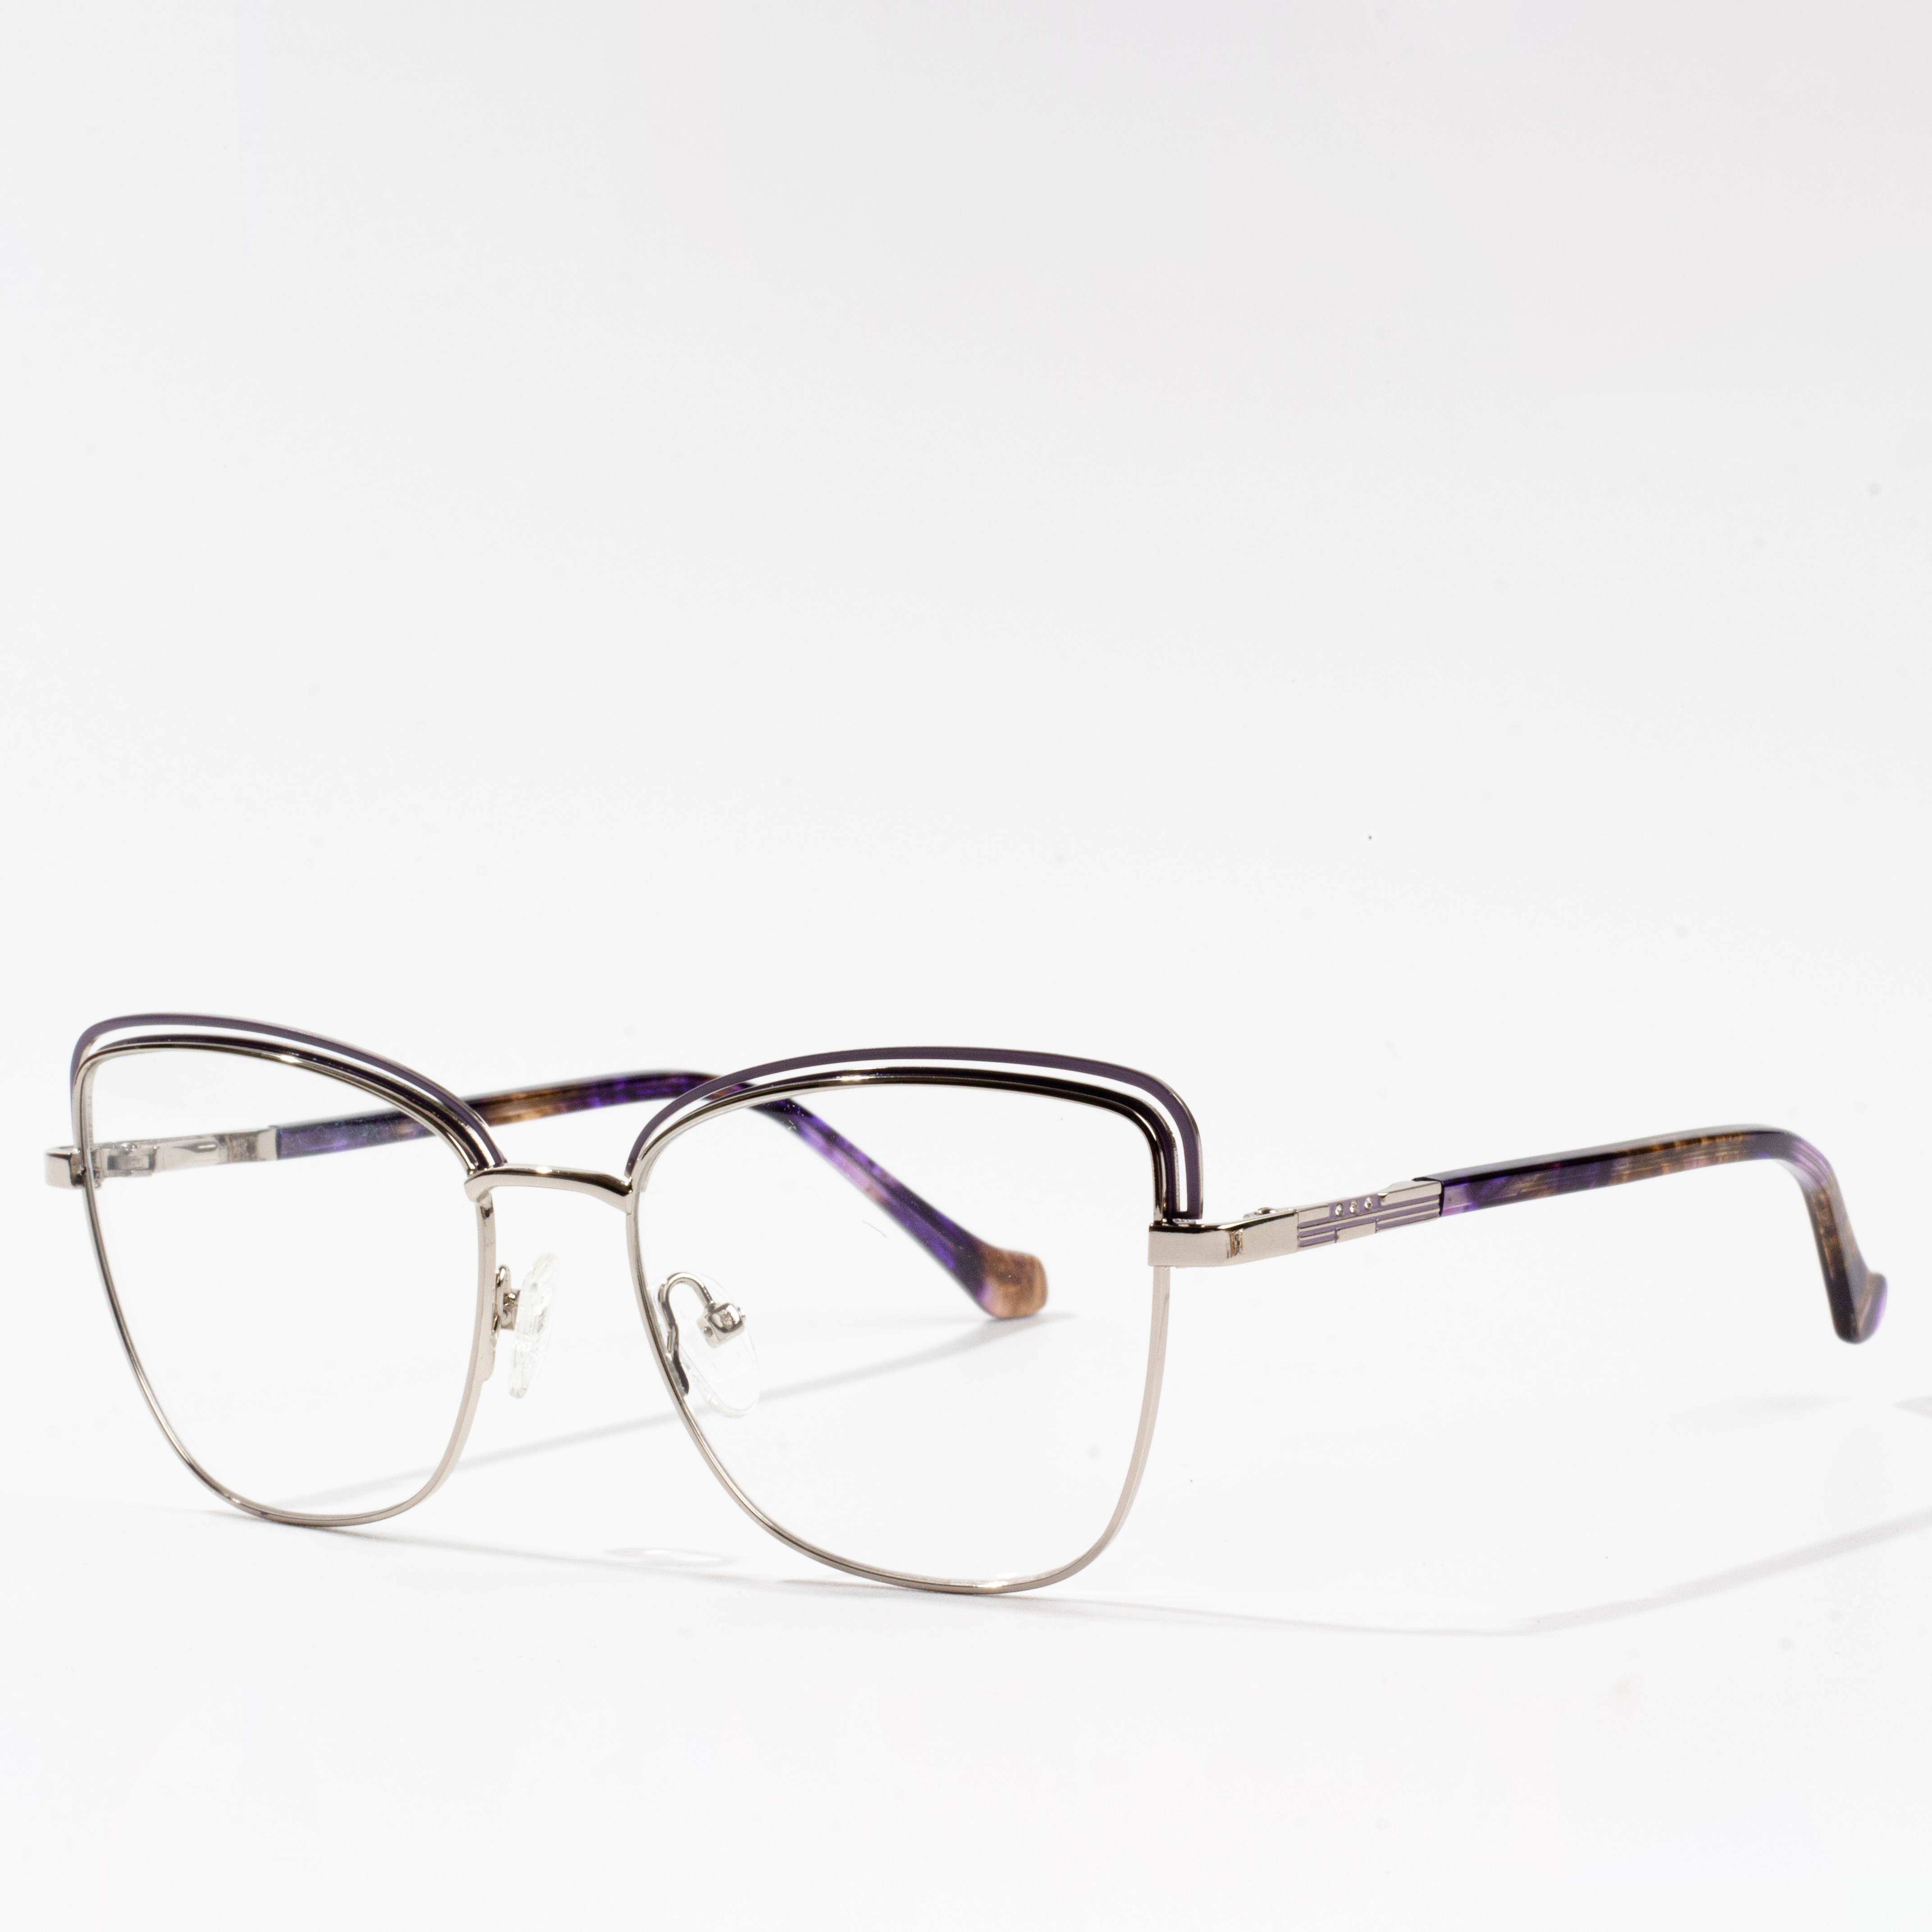 hoosing eyeglass frames